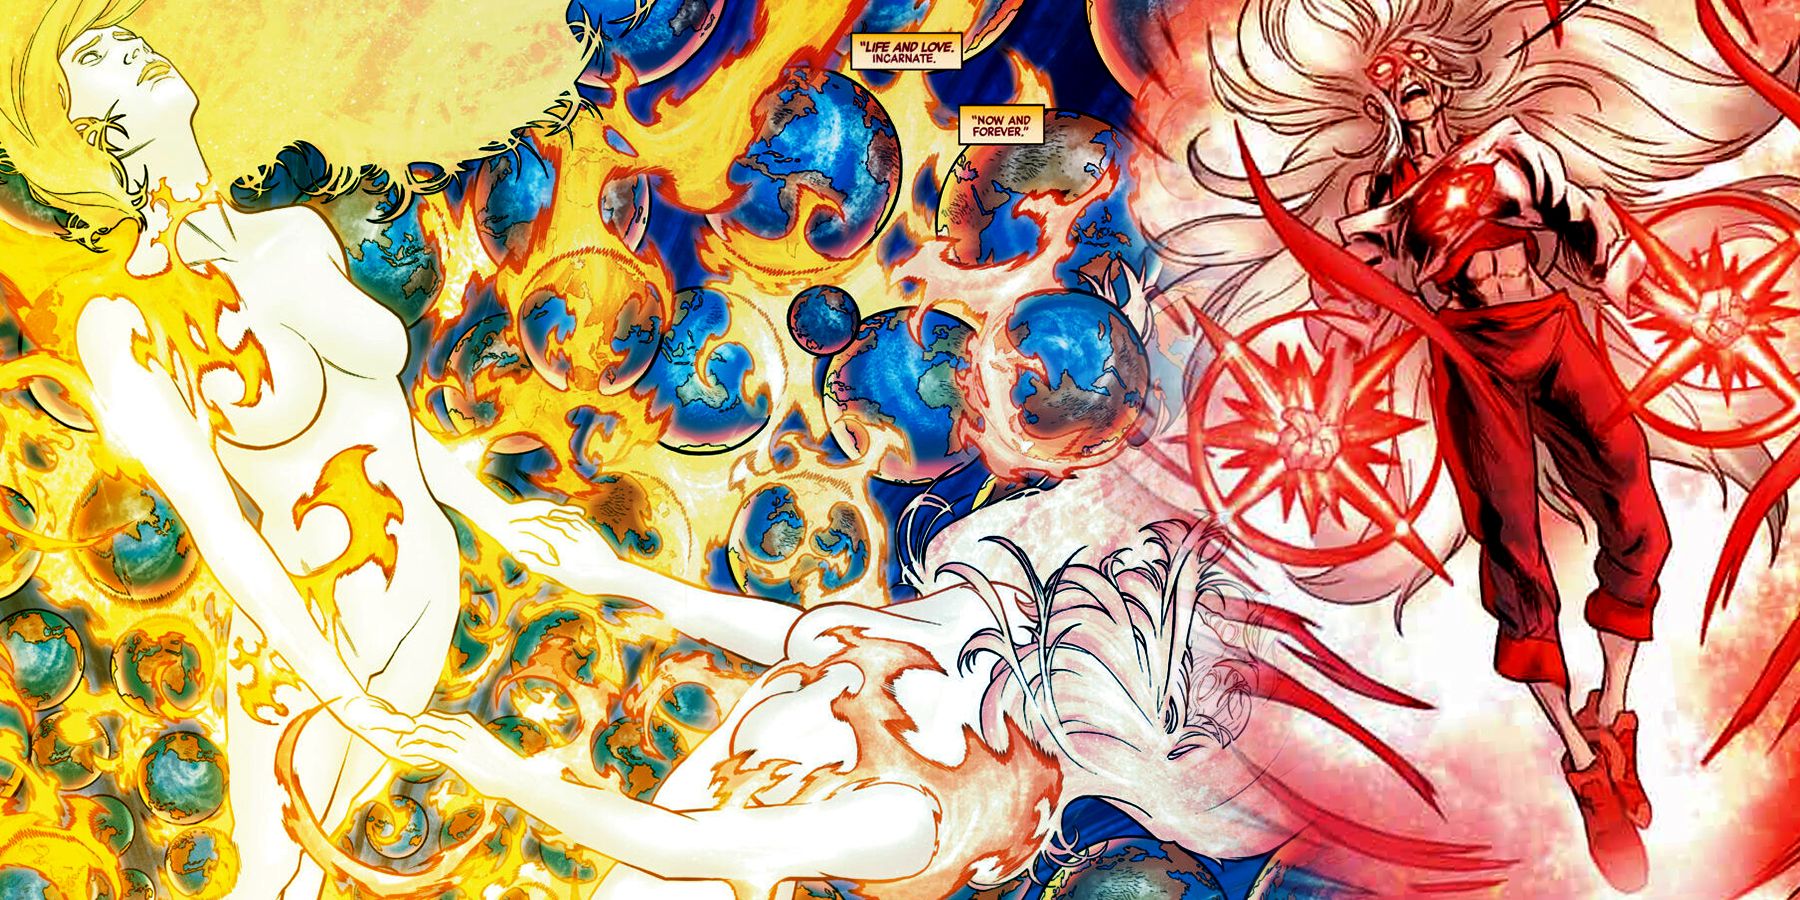 Starbrand and Firehair make a sacrifice in comic 'Avengers Assemble Omega'.